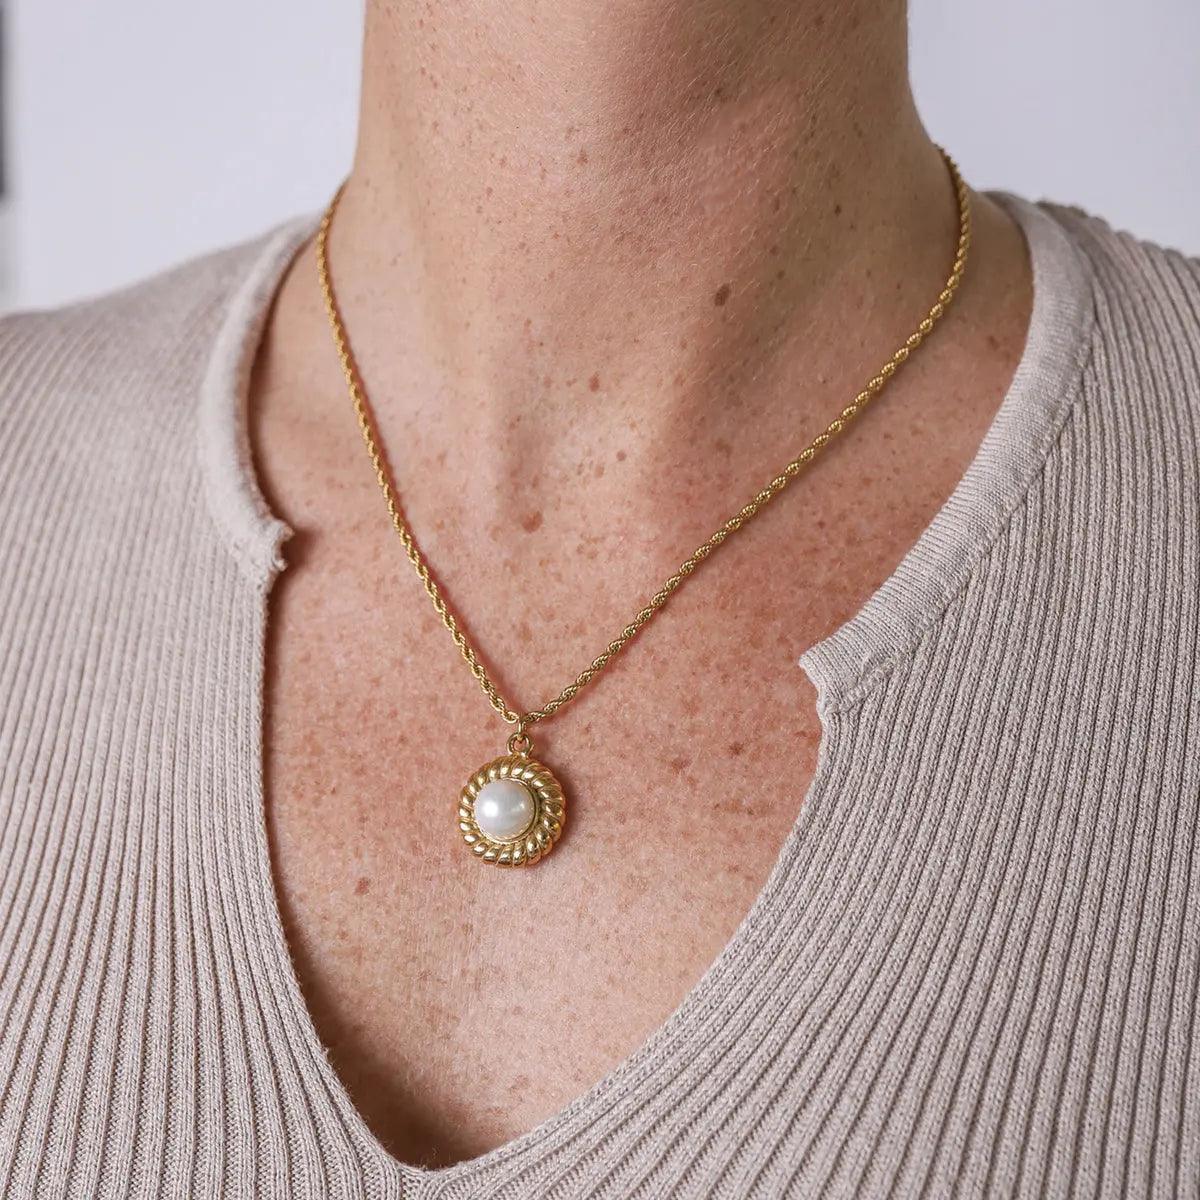 Gold Pearl Pendant With Rope Chain Necklace - Camillaboutiqueco camillaboutiqueshop.com